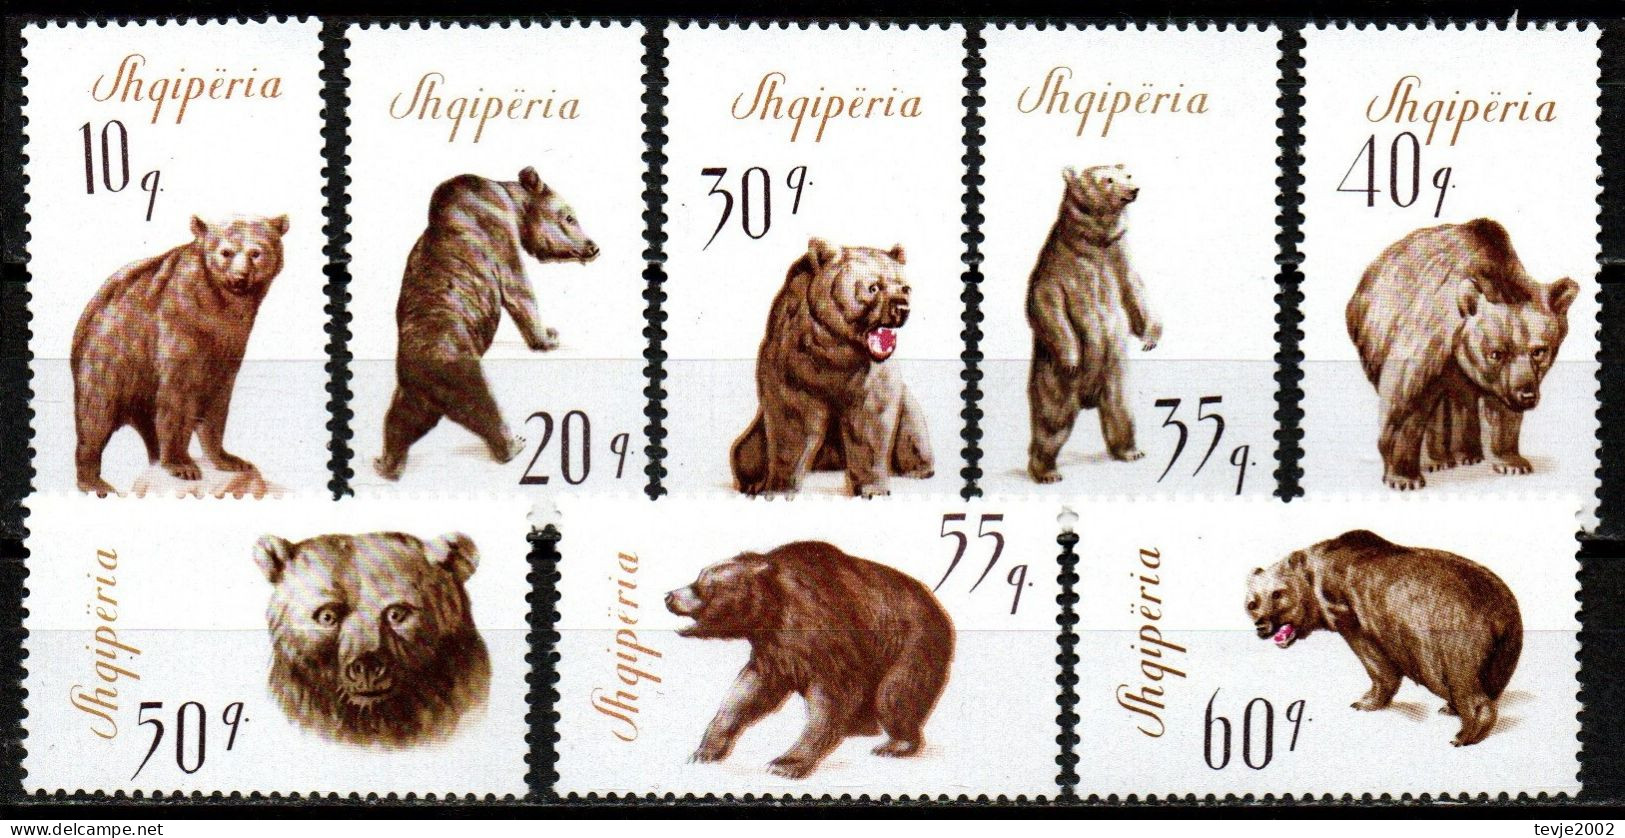 Albanien 1965 - Mi.Nr. 1010 - 1017 - Postfrisch MNH - Tiere Animals Bären Bears - Osos